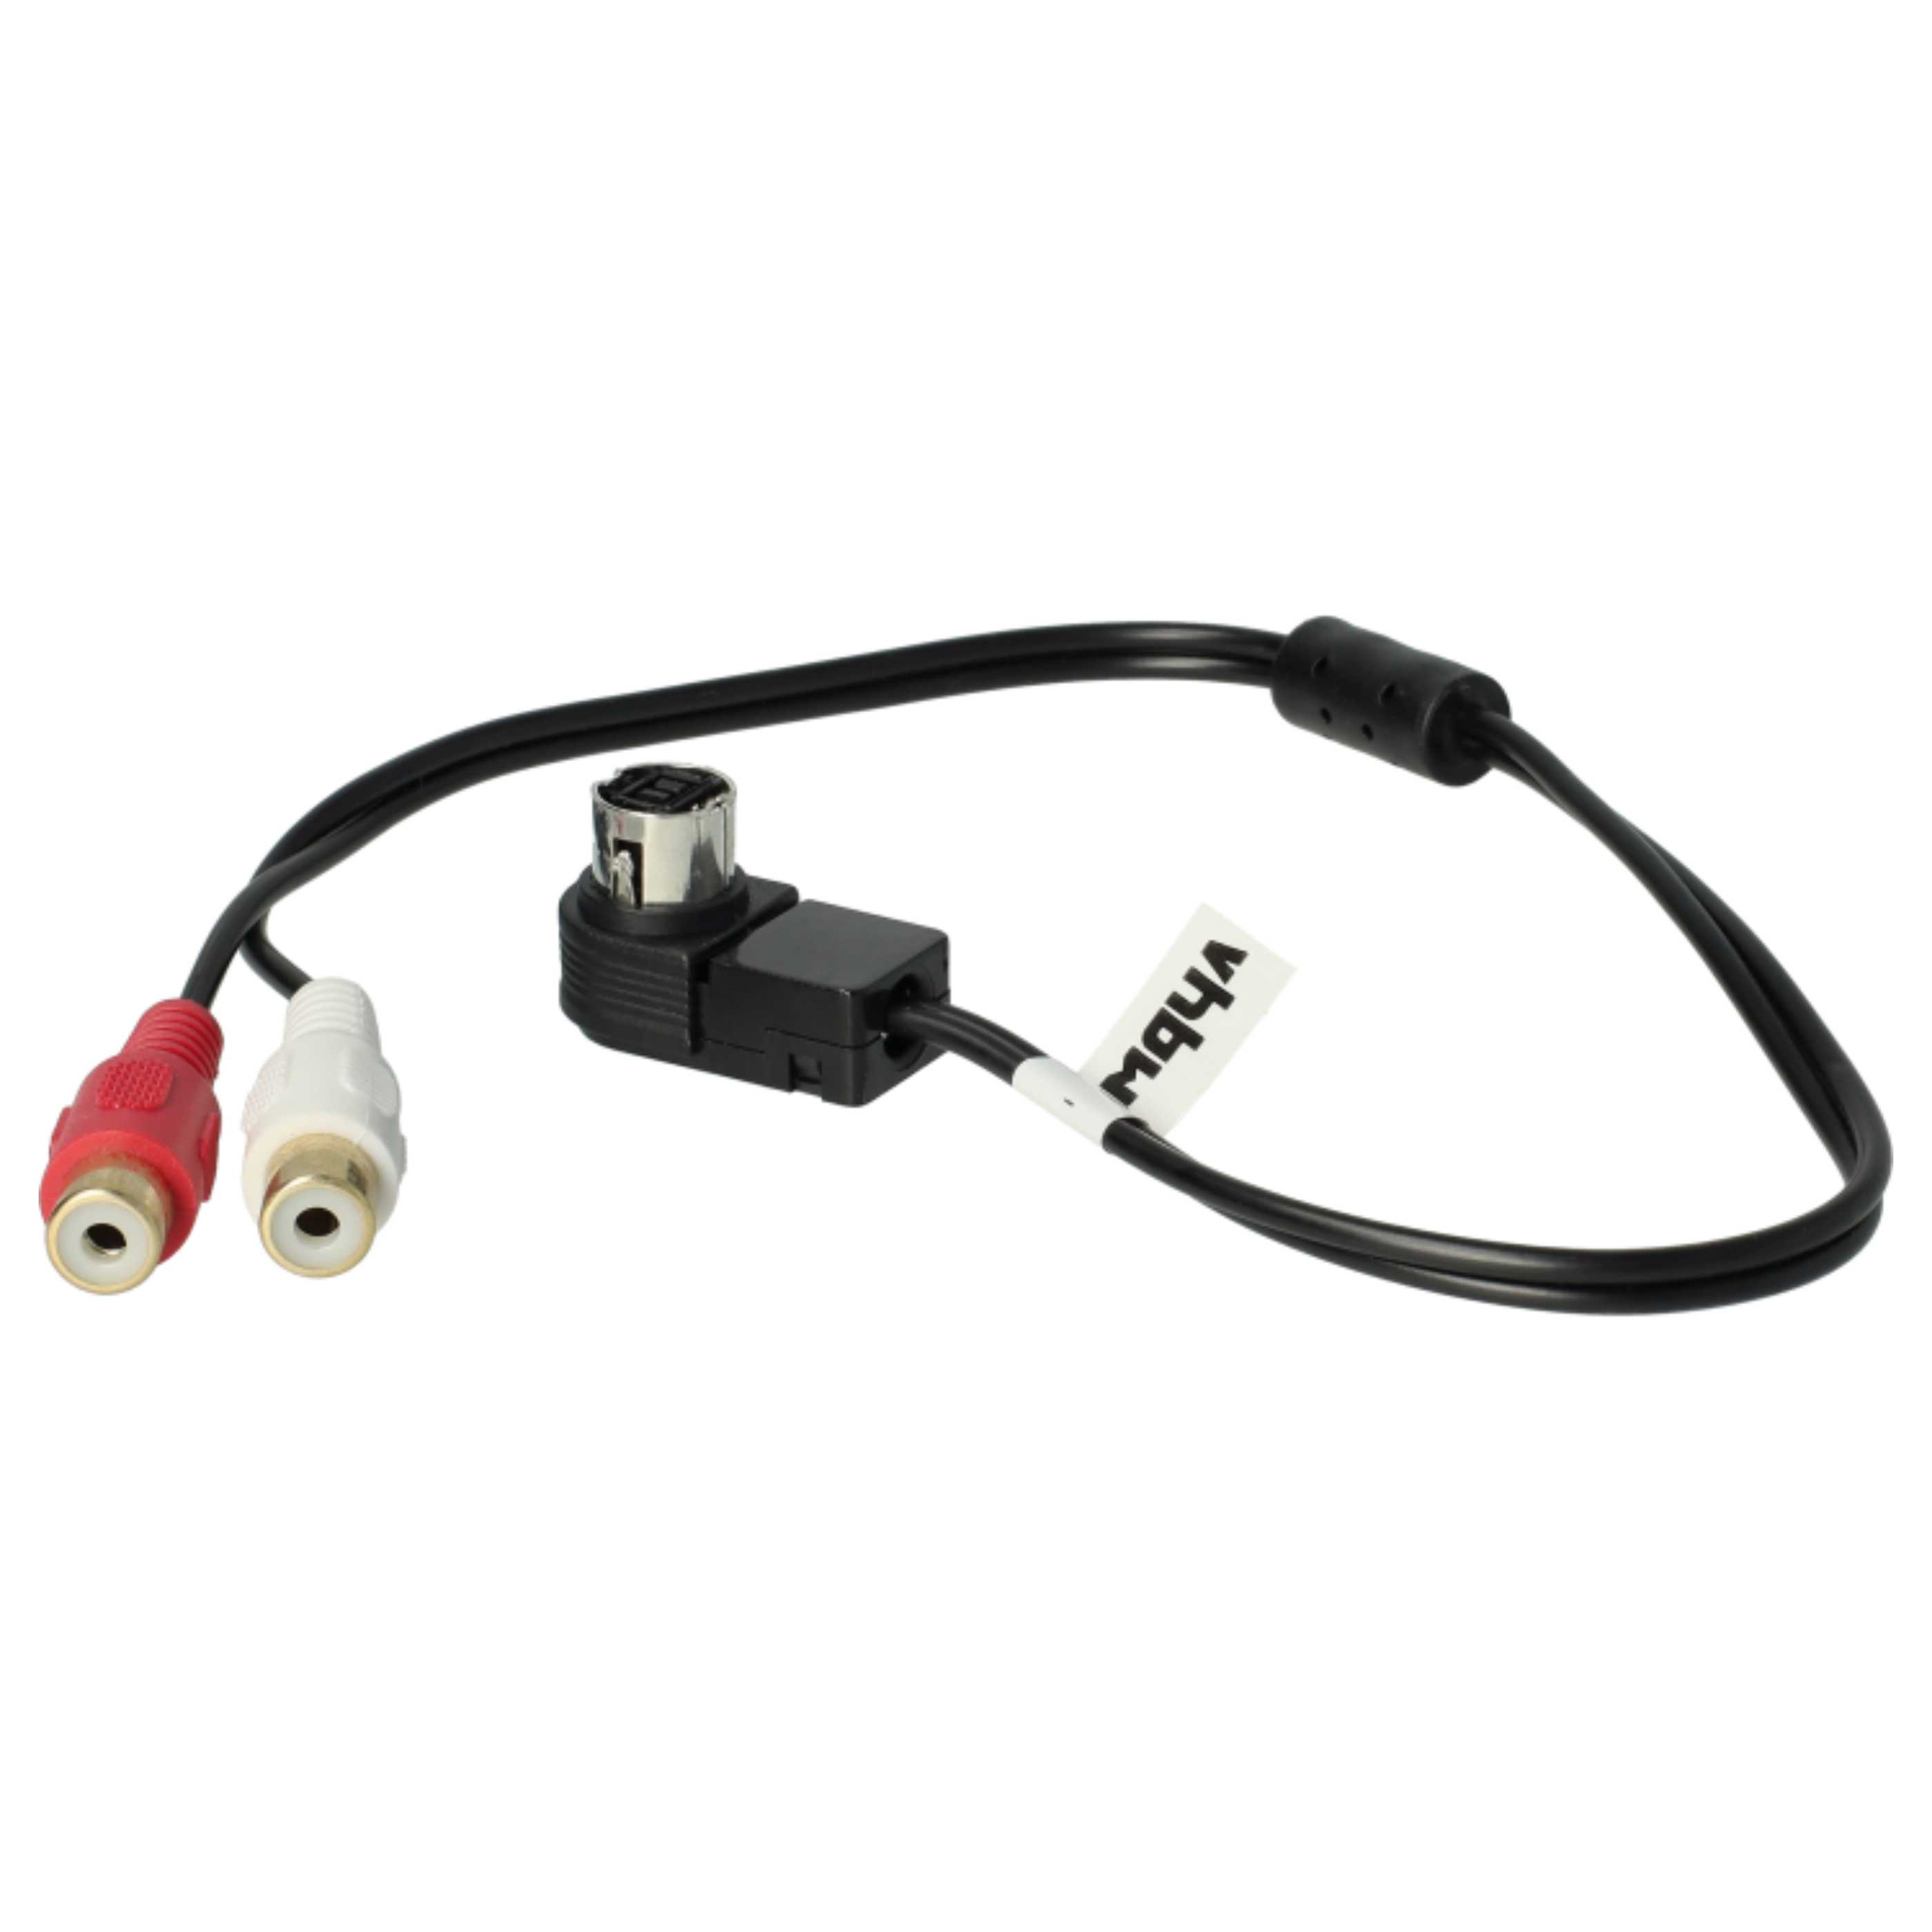 Audio Cable replaces JVC KS-U57 for Car Radio - 60 cm long